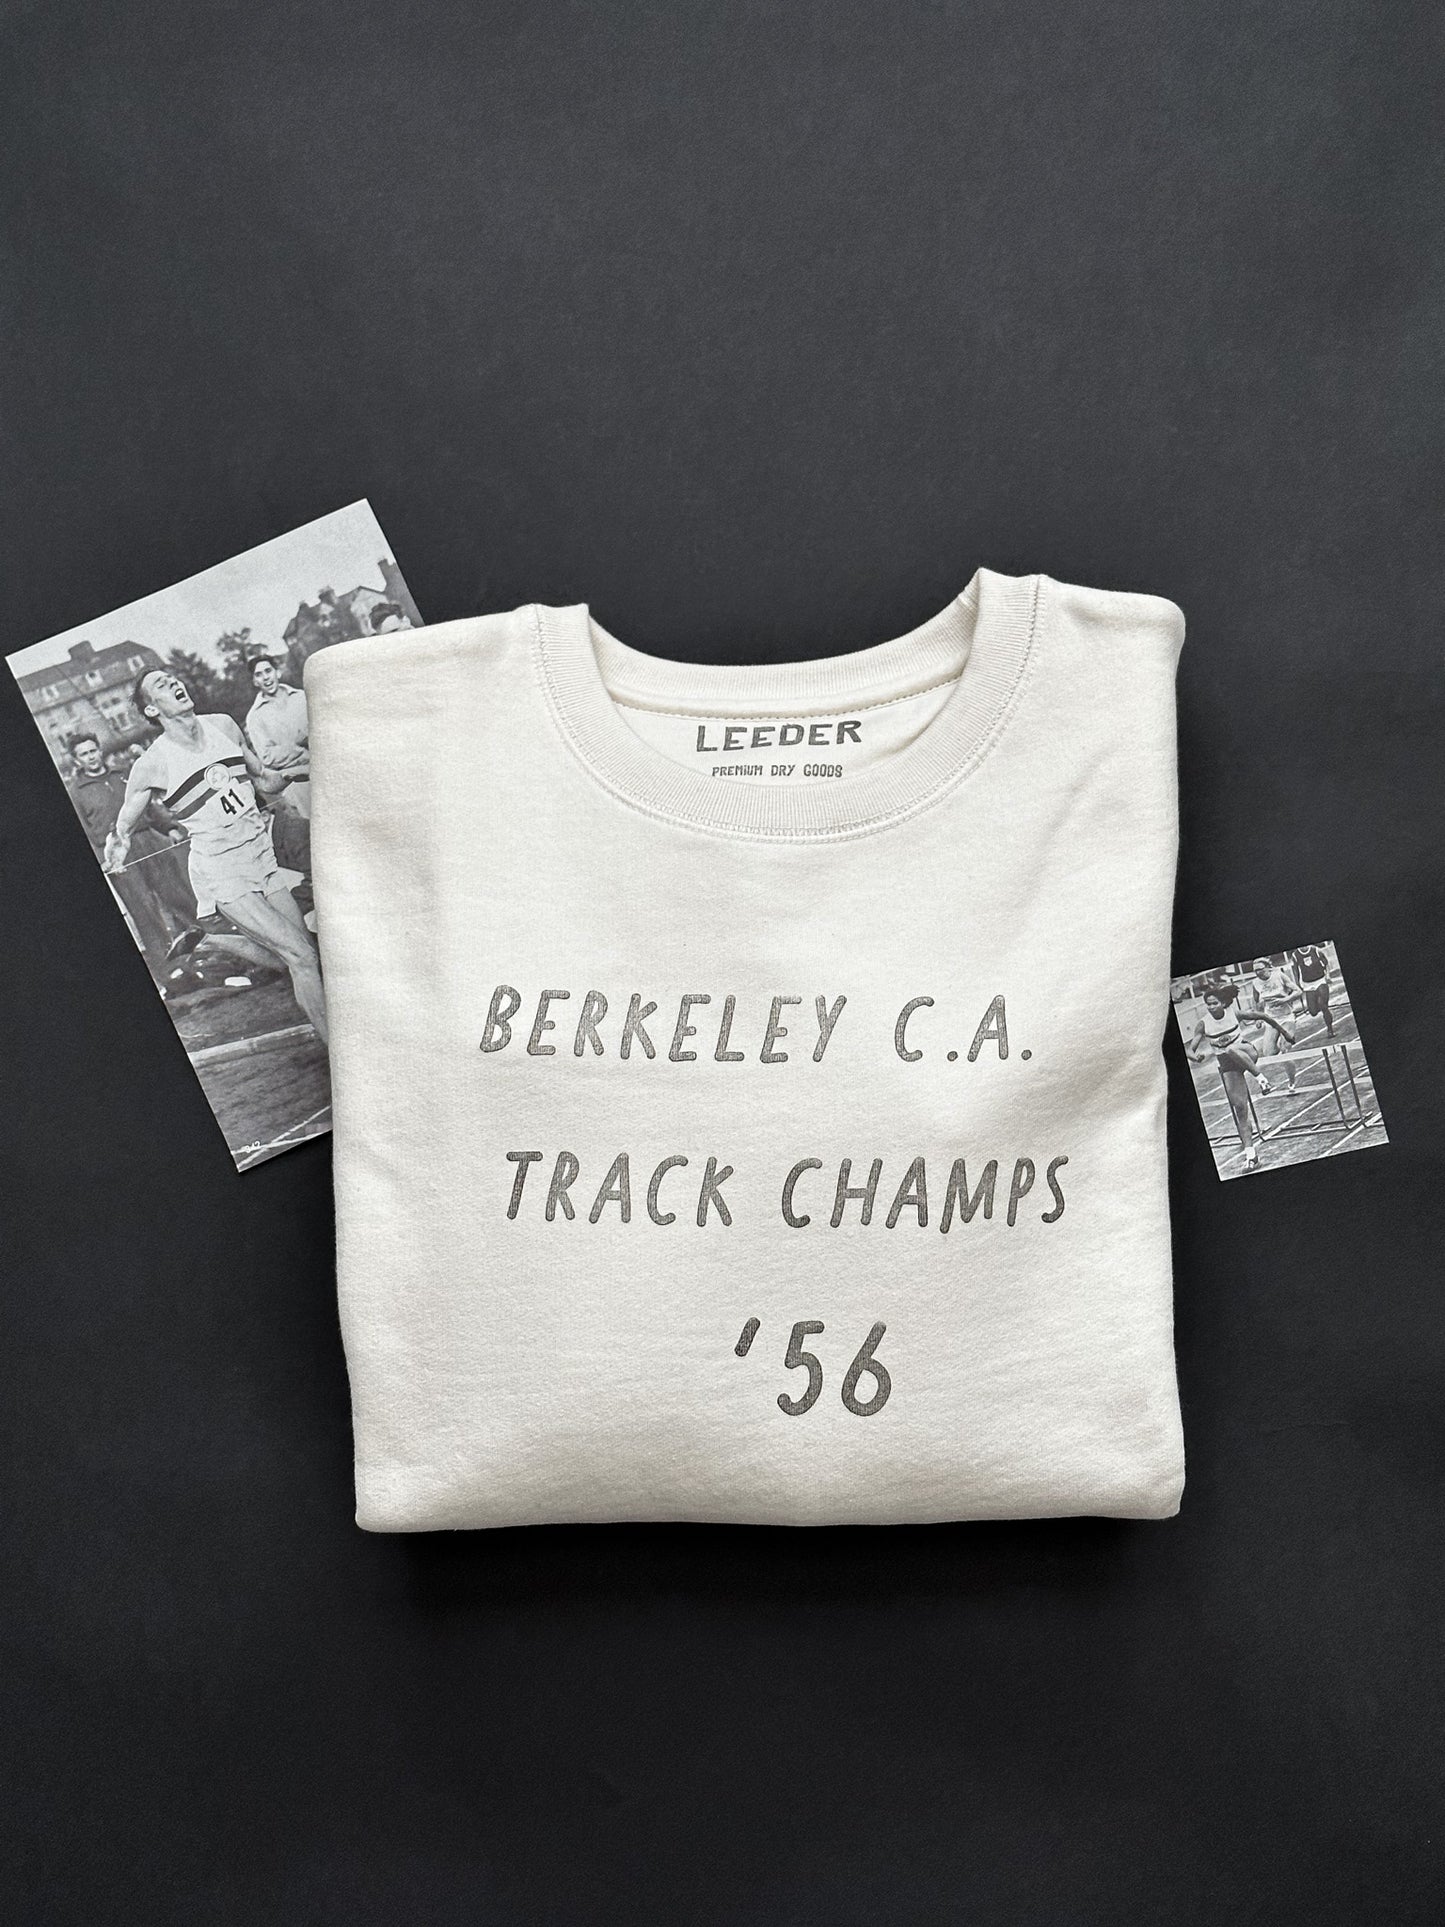 BERKELEY C.A. TRACK CHAMPS '56 HAND STAMPED SWEATSHIRT